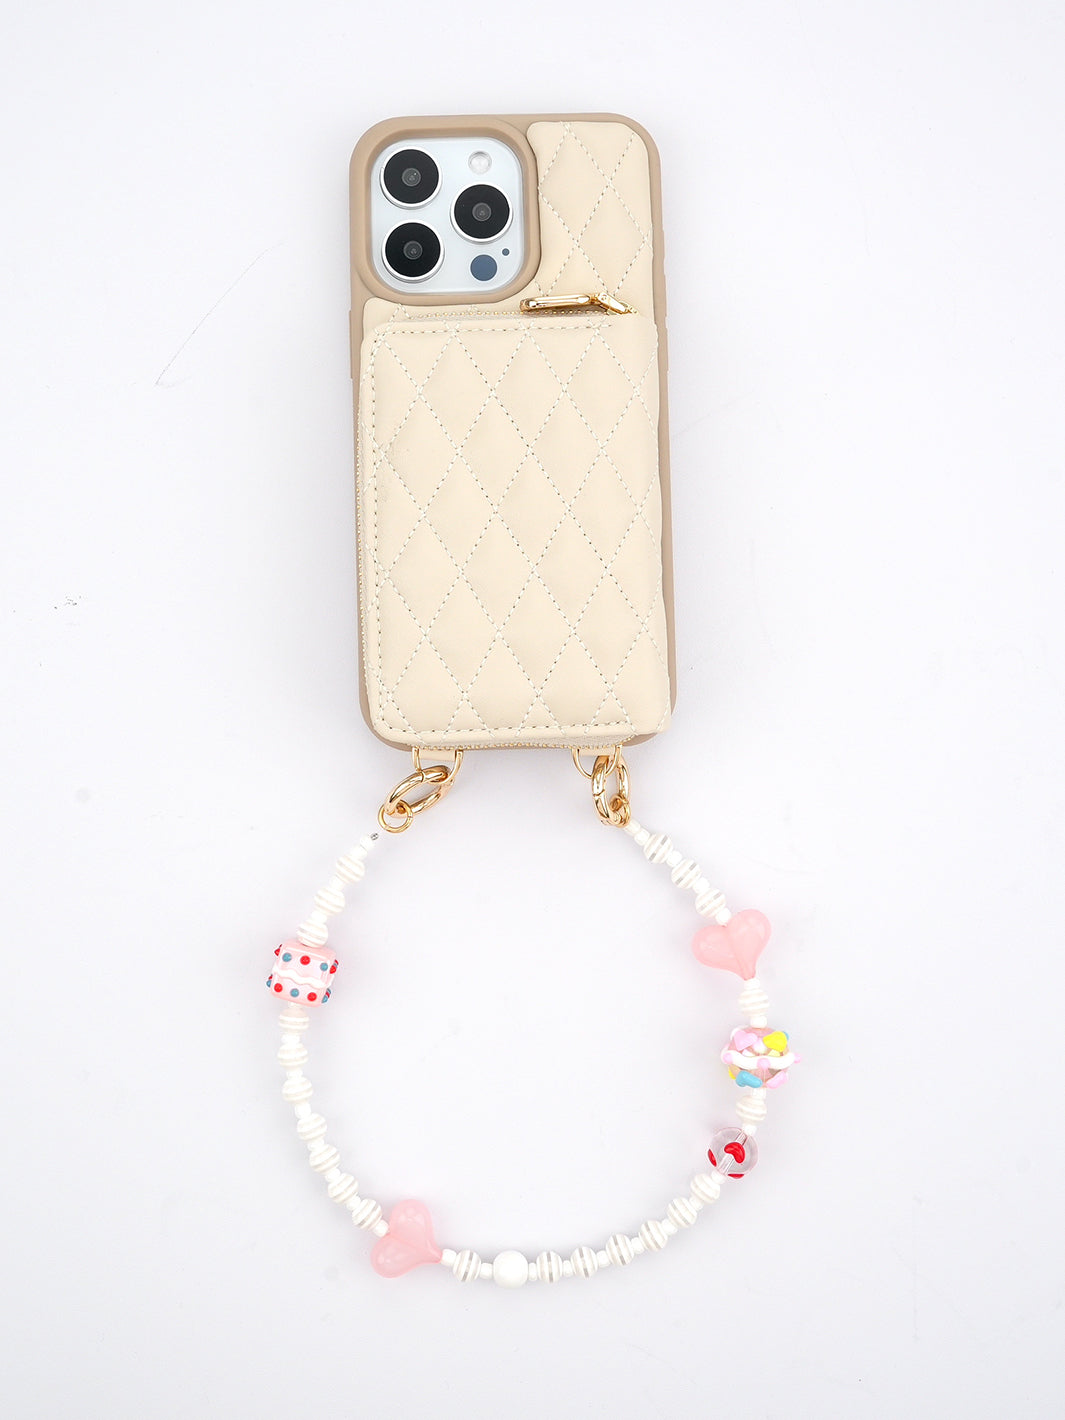 Couple's Style-Love Phone Case Wrist Strap